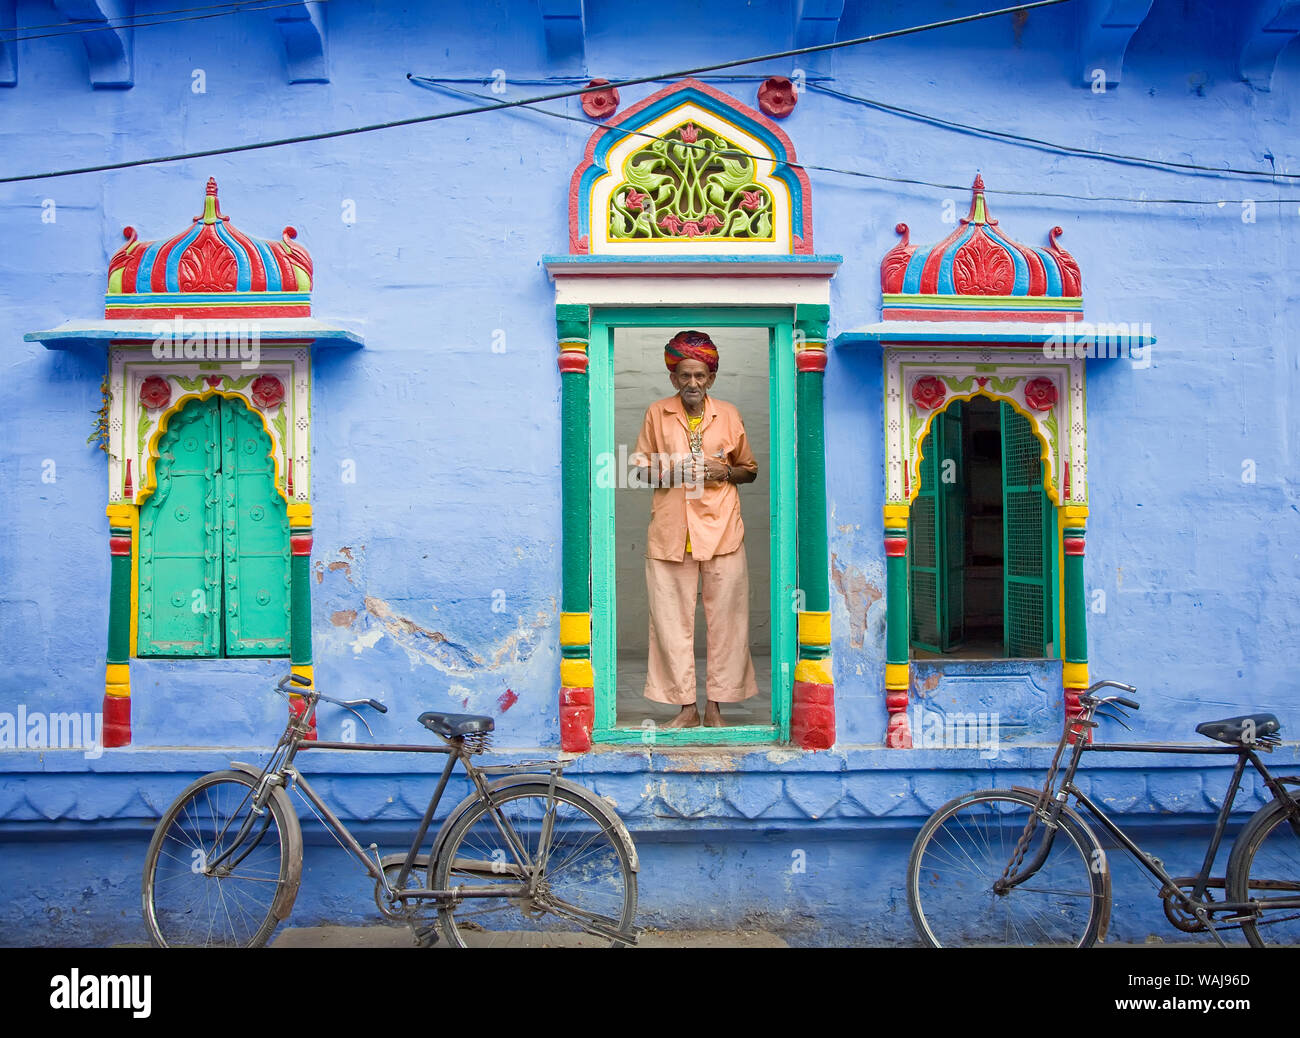 India Rajasthan, uomo spirituale nella porta. Credito come: Jim Nilsen Jaynes / Galleria / DanitaDelimont.com Foto Stock